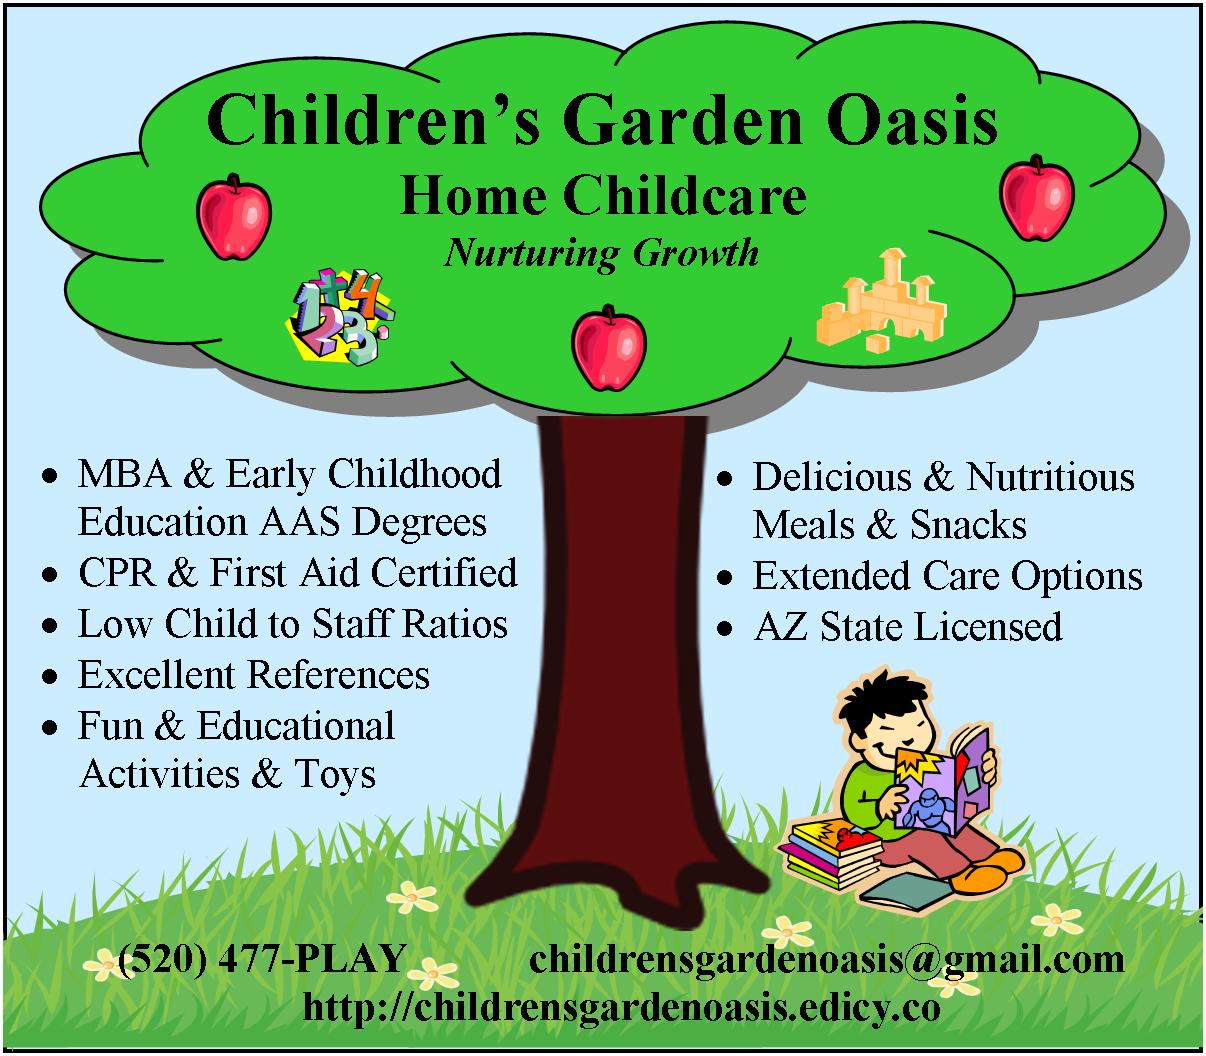 Children's Garden Oasis Home Childcare